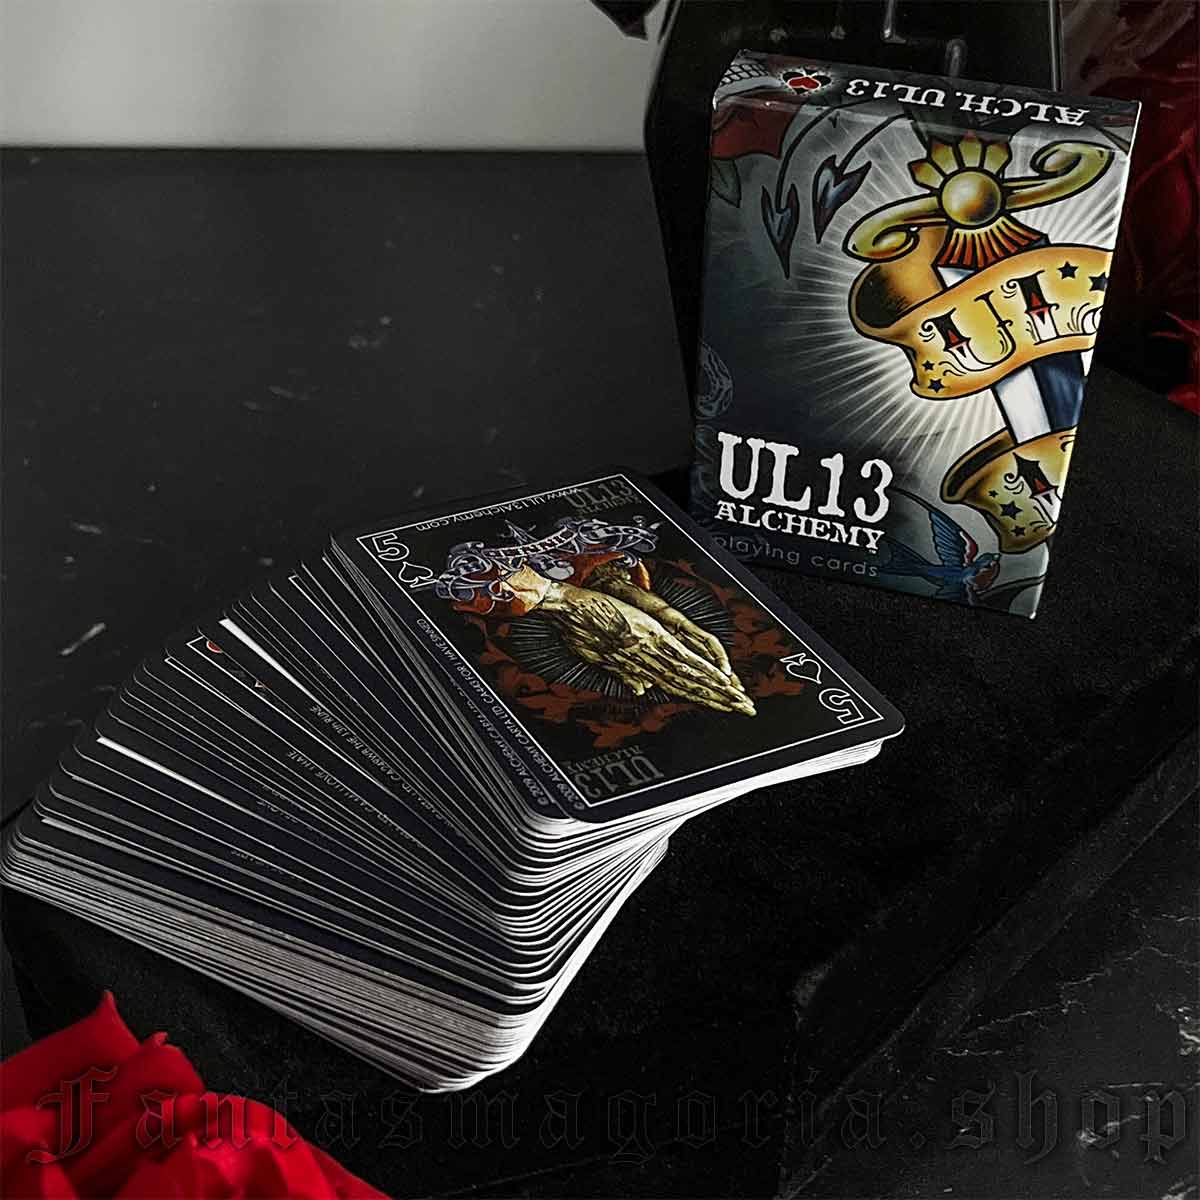 UL13 Alchemy Playing Cards